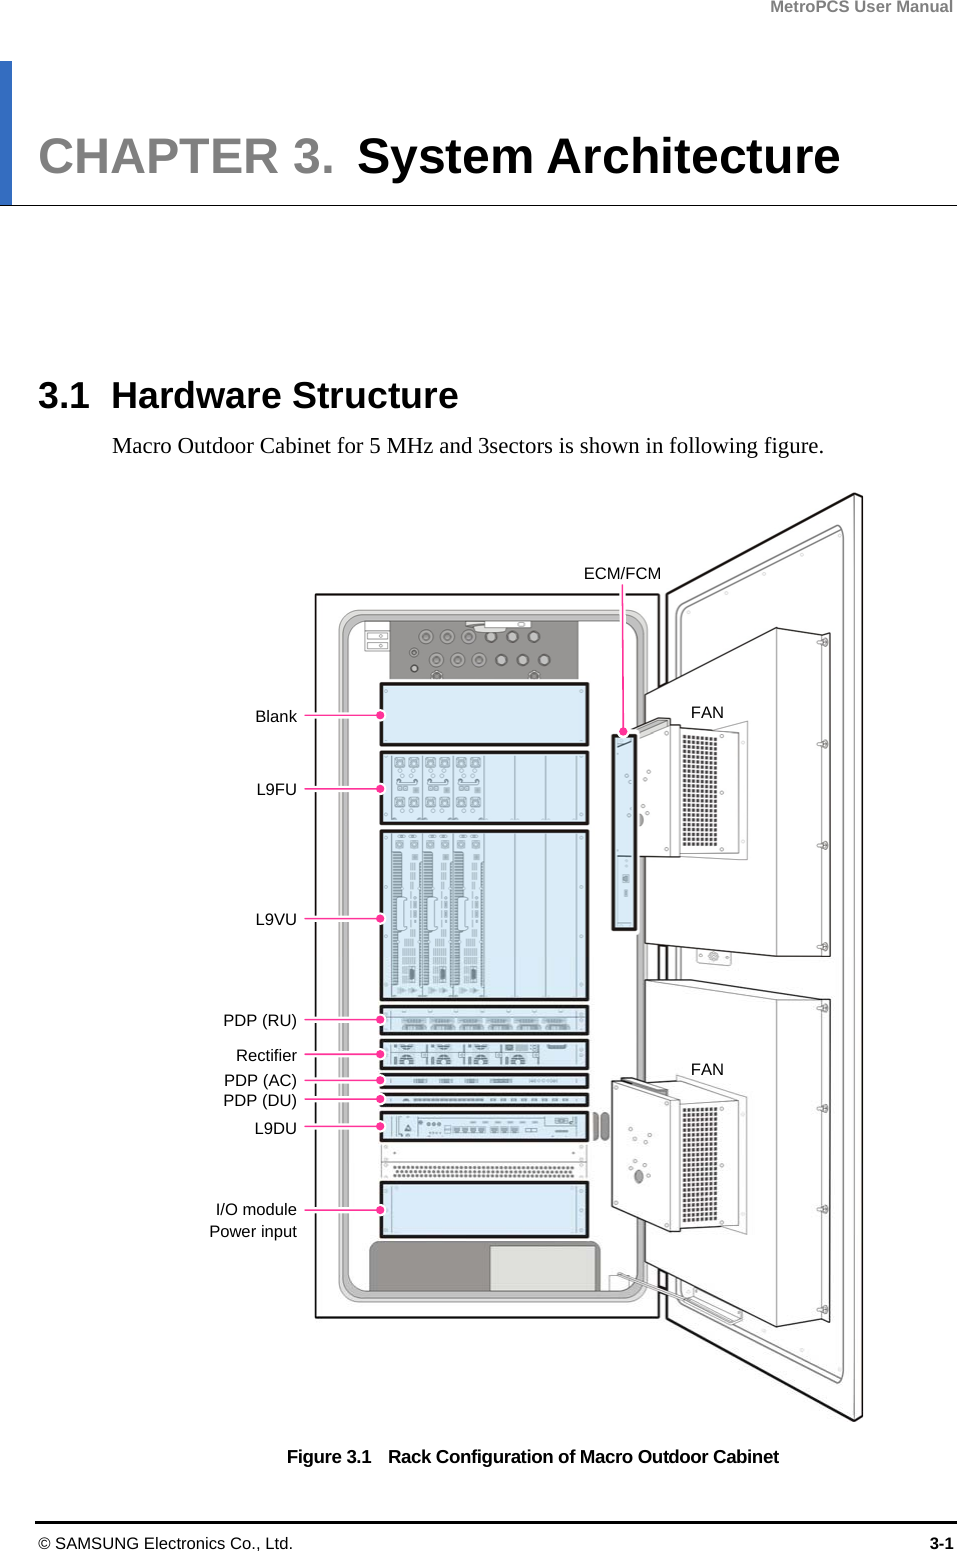 MetroPCS User Manual © SAMSUNG Electronics Co., Ltd.  3-1 CHAPTER 3.  System Architecture      3.1 Hardware Structure Macro Outdoor Cabinet for 5 MHz and 3sectors is shown in following figure. Figure 3.1    Rack Configuration of Macro Outdoor Cabinet Blank L9FU L9VU PDP (RU) Rectifier PDP (AC) PDP (DU) L9DU I/O module Power input ECM/FCM FAN FAN 